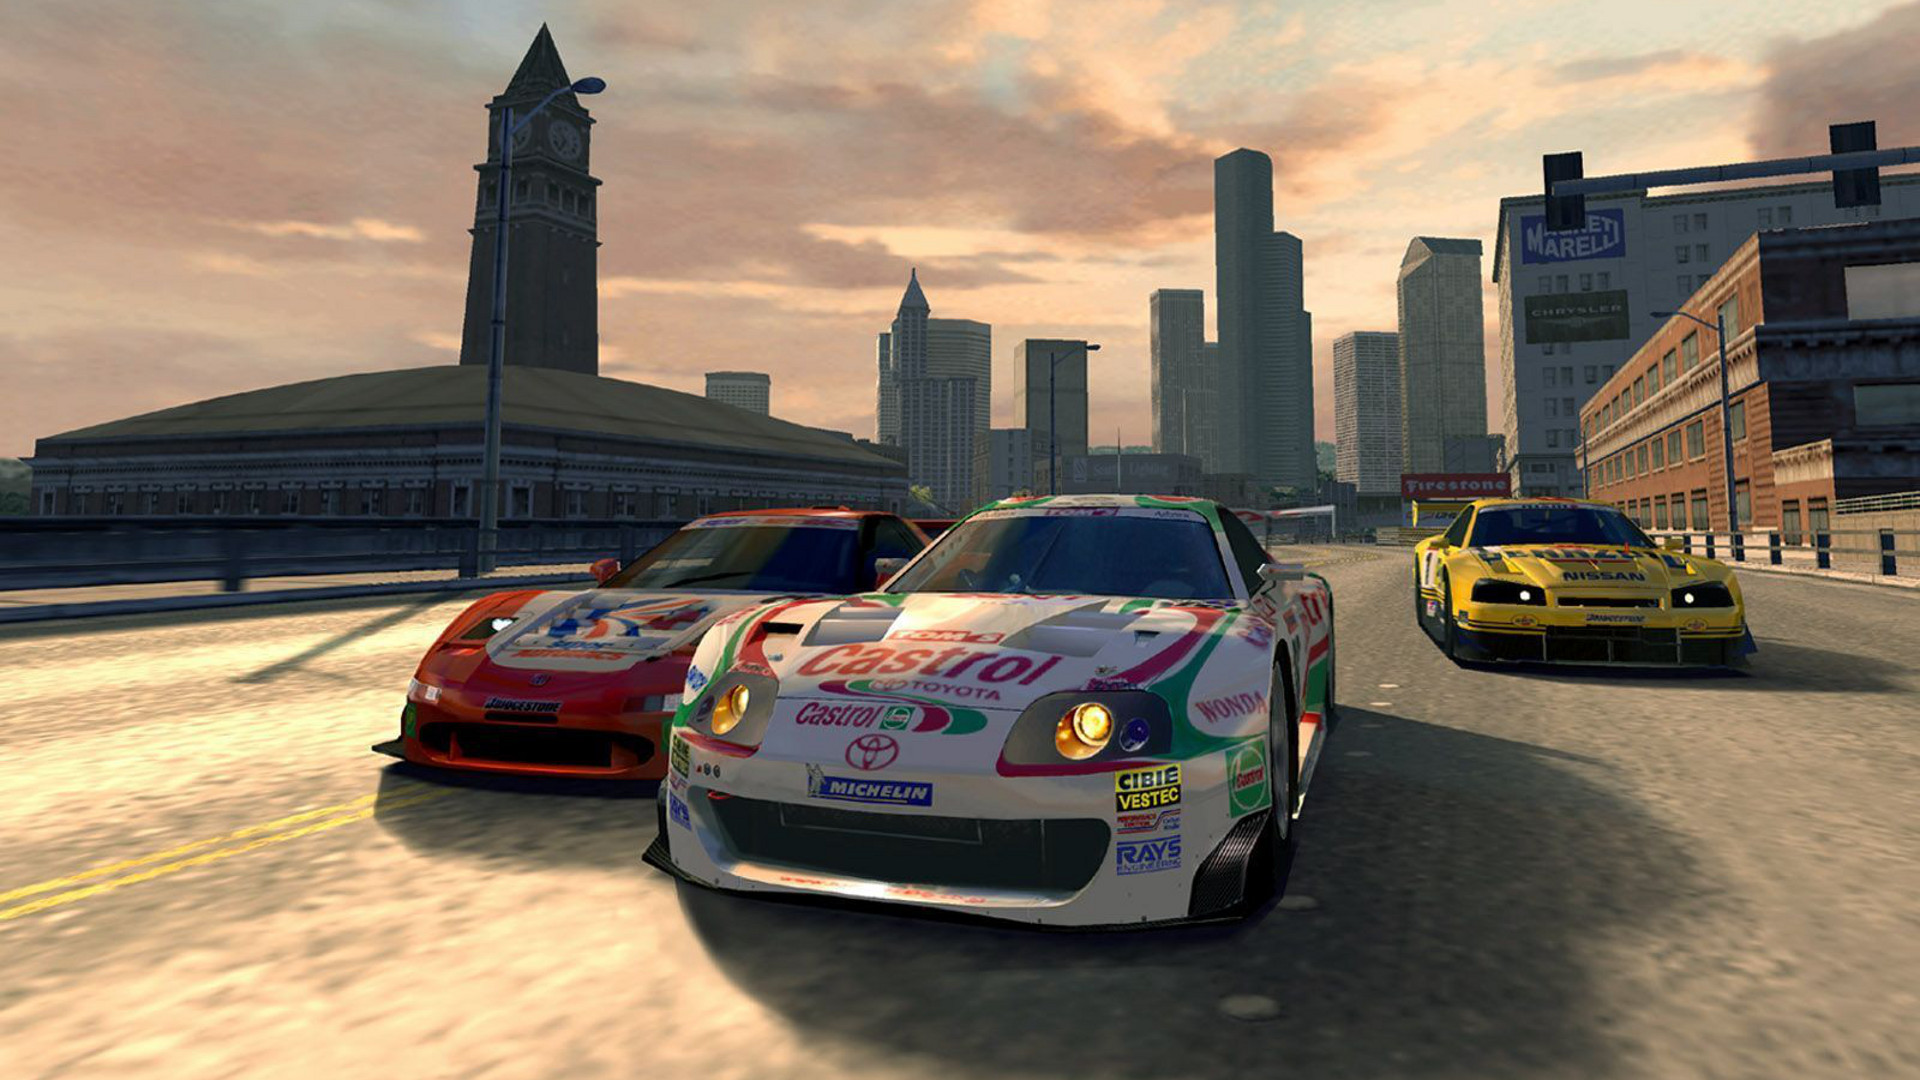 Gran Turismo 4 Details LaunchBox Games Database